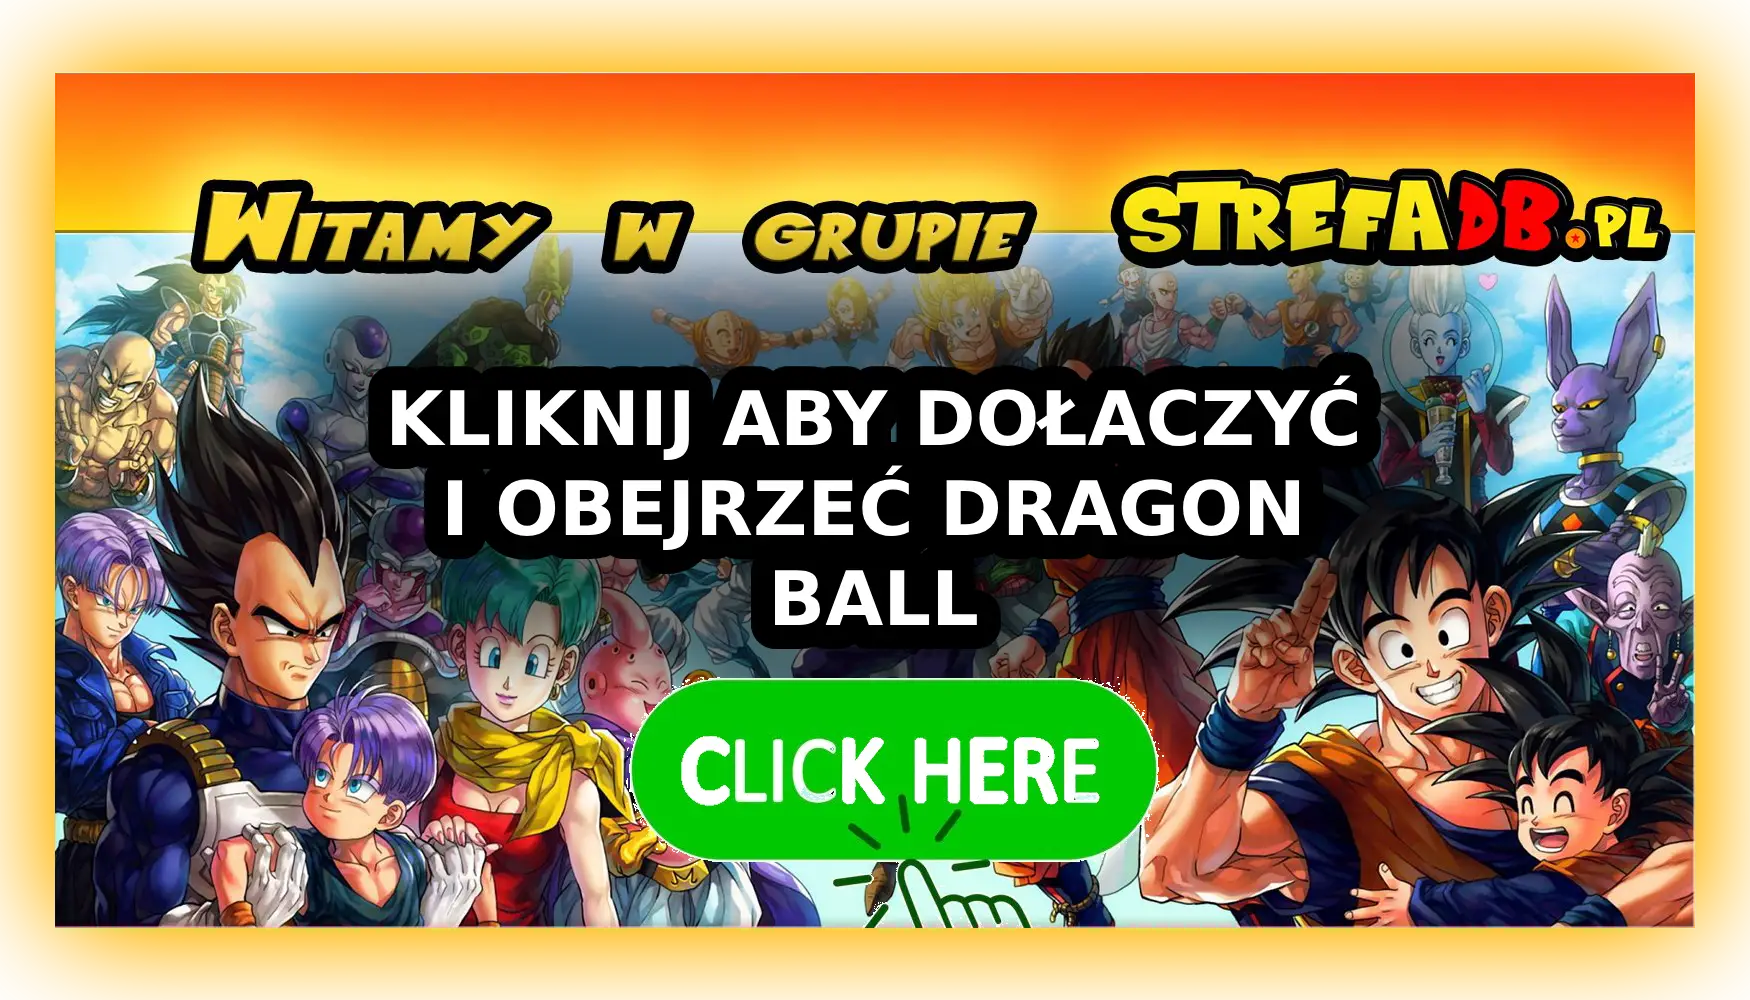 Partner Group - StrefaDB ogladaj dragon ball!